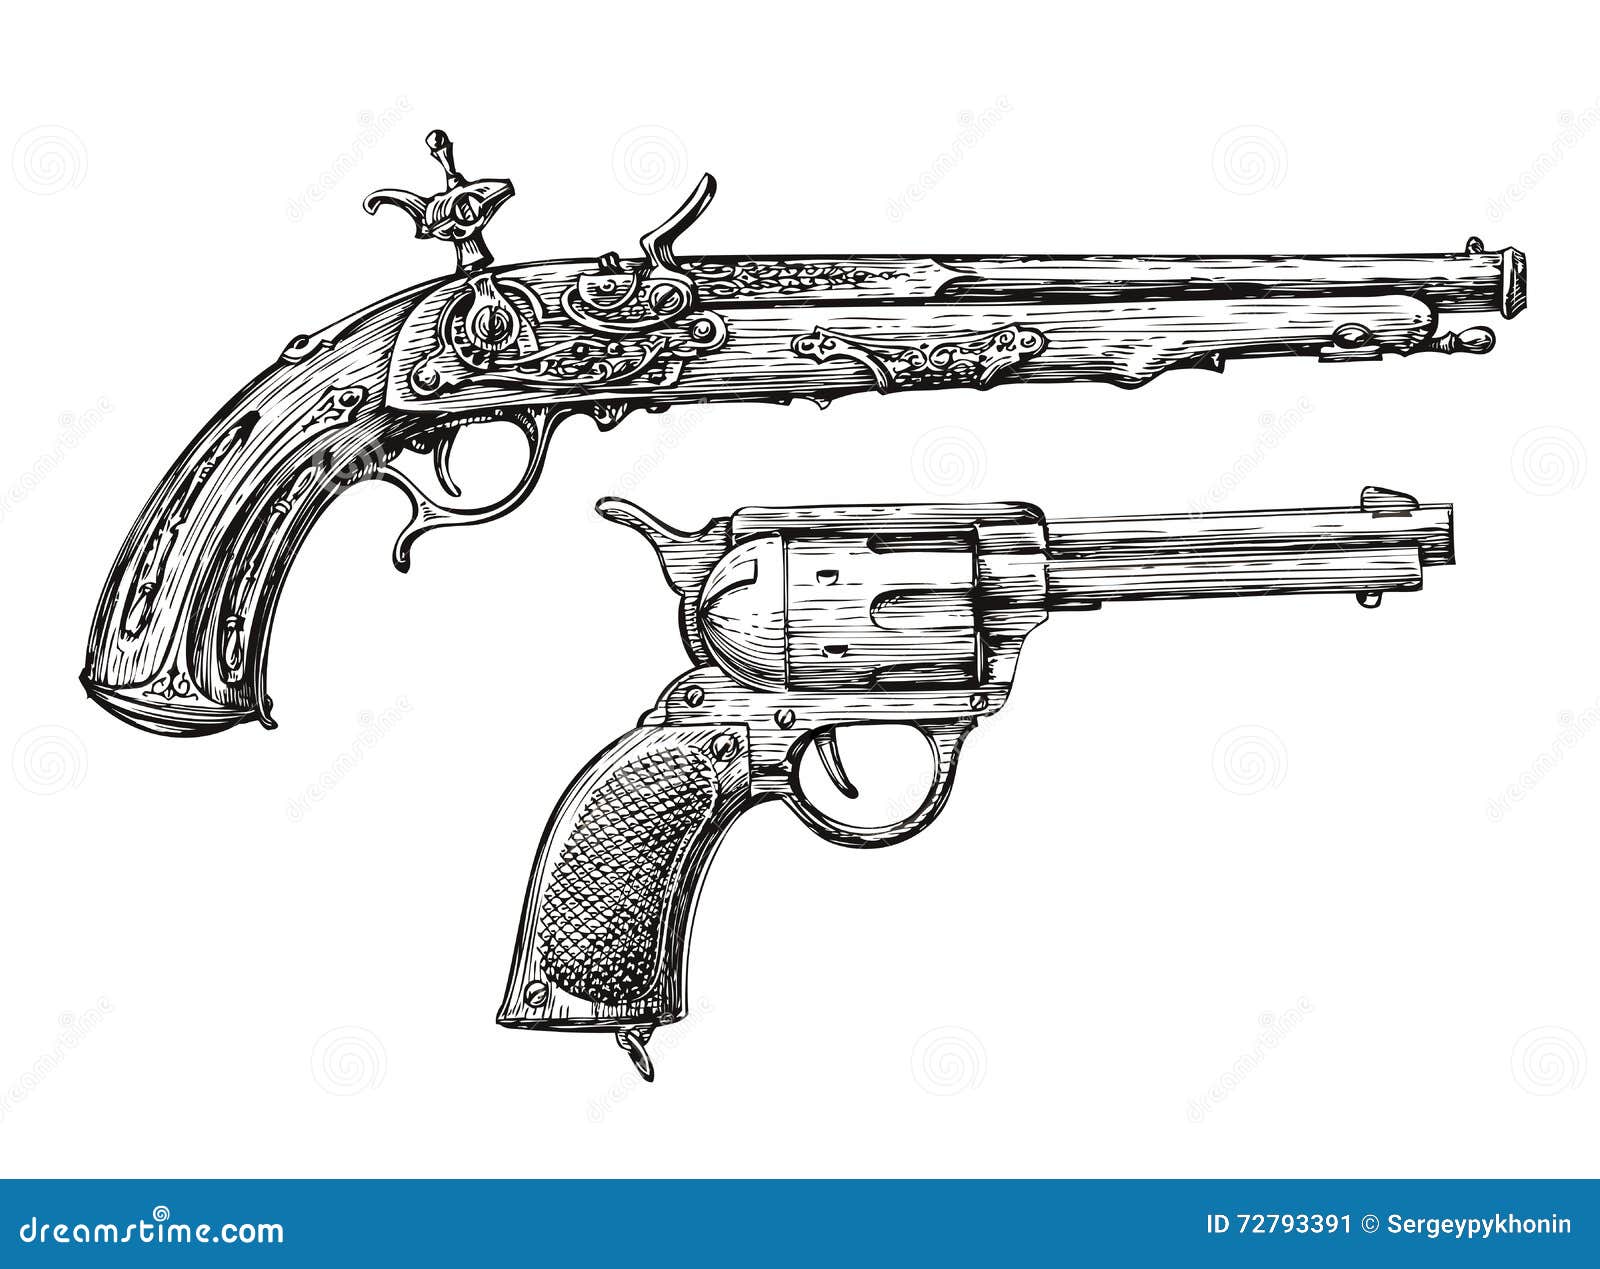 vintage gun. retro pistol, musket. hand-drawn sketch of a revolver, weapon, firearm